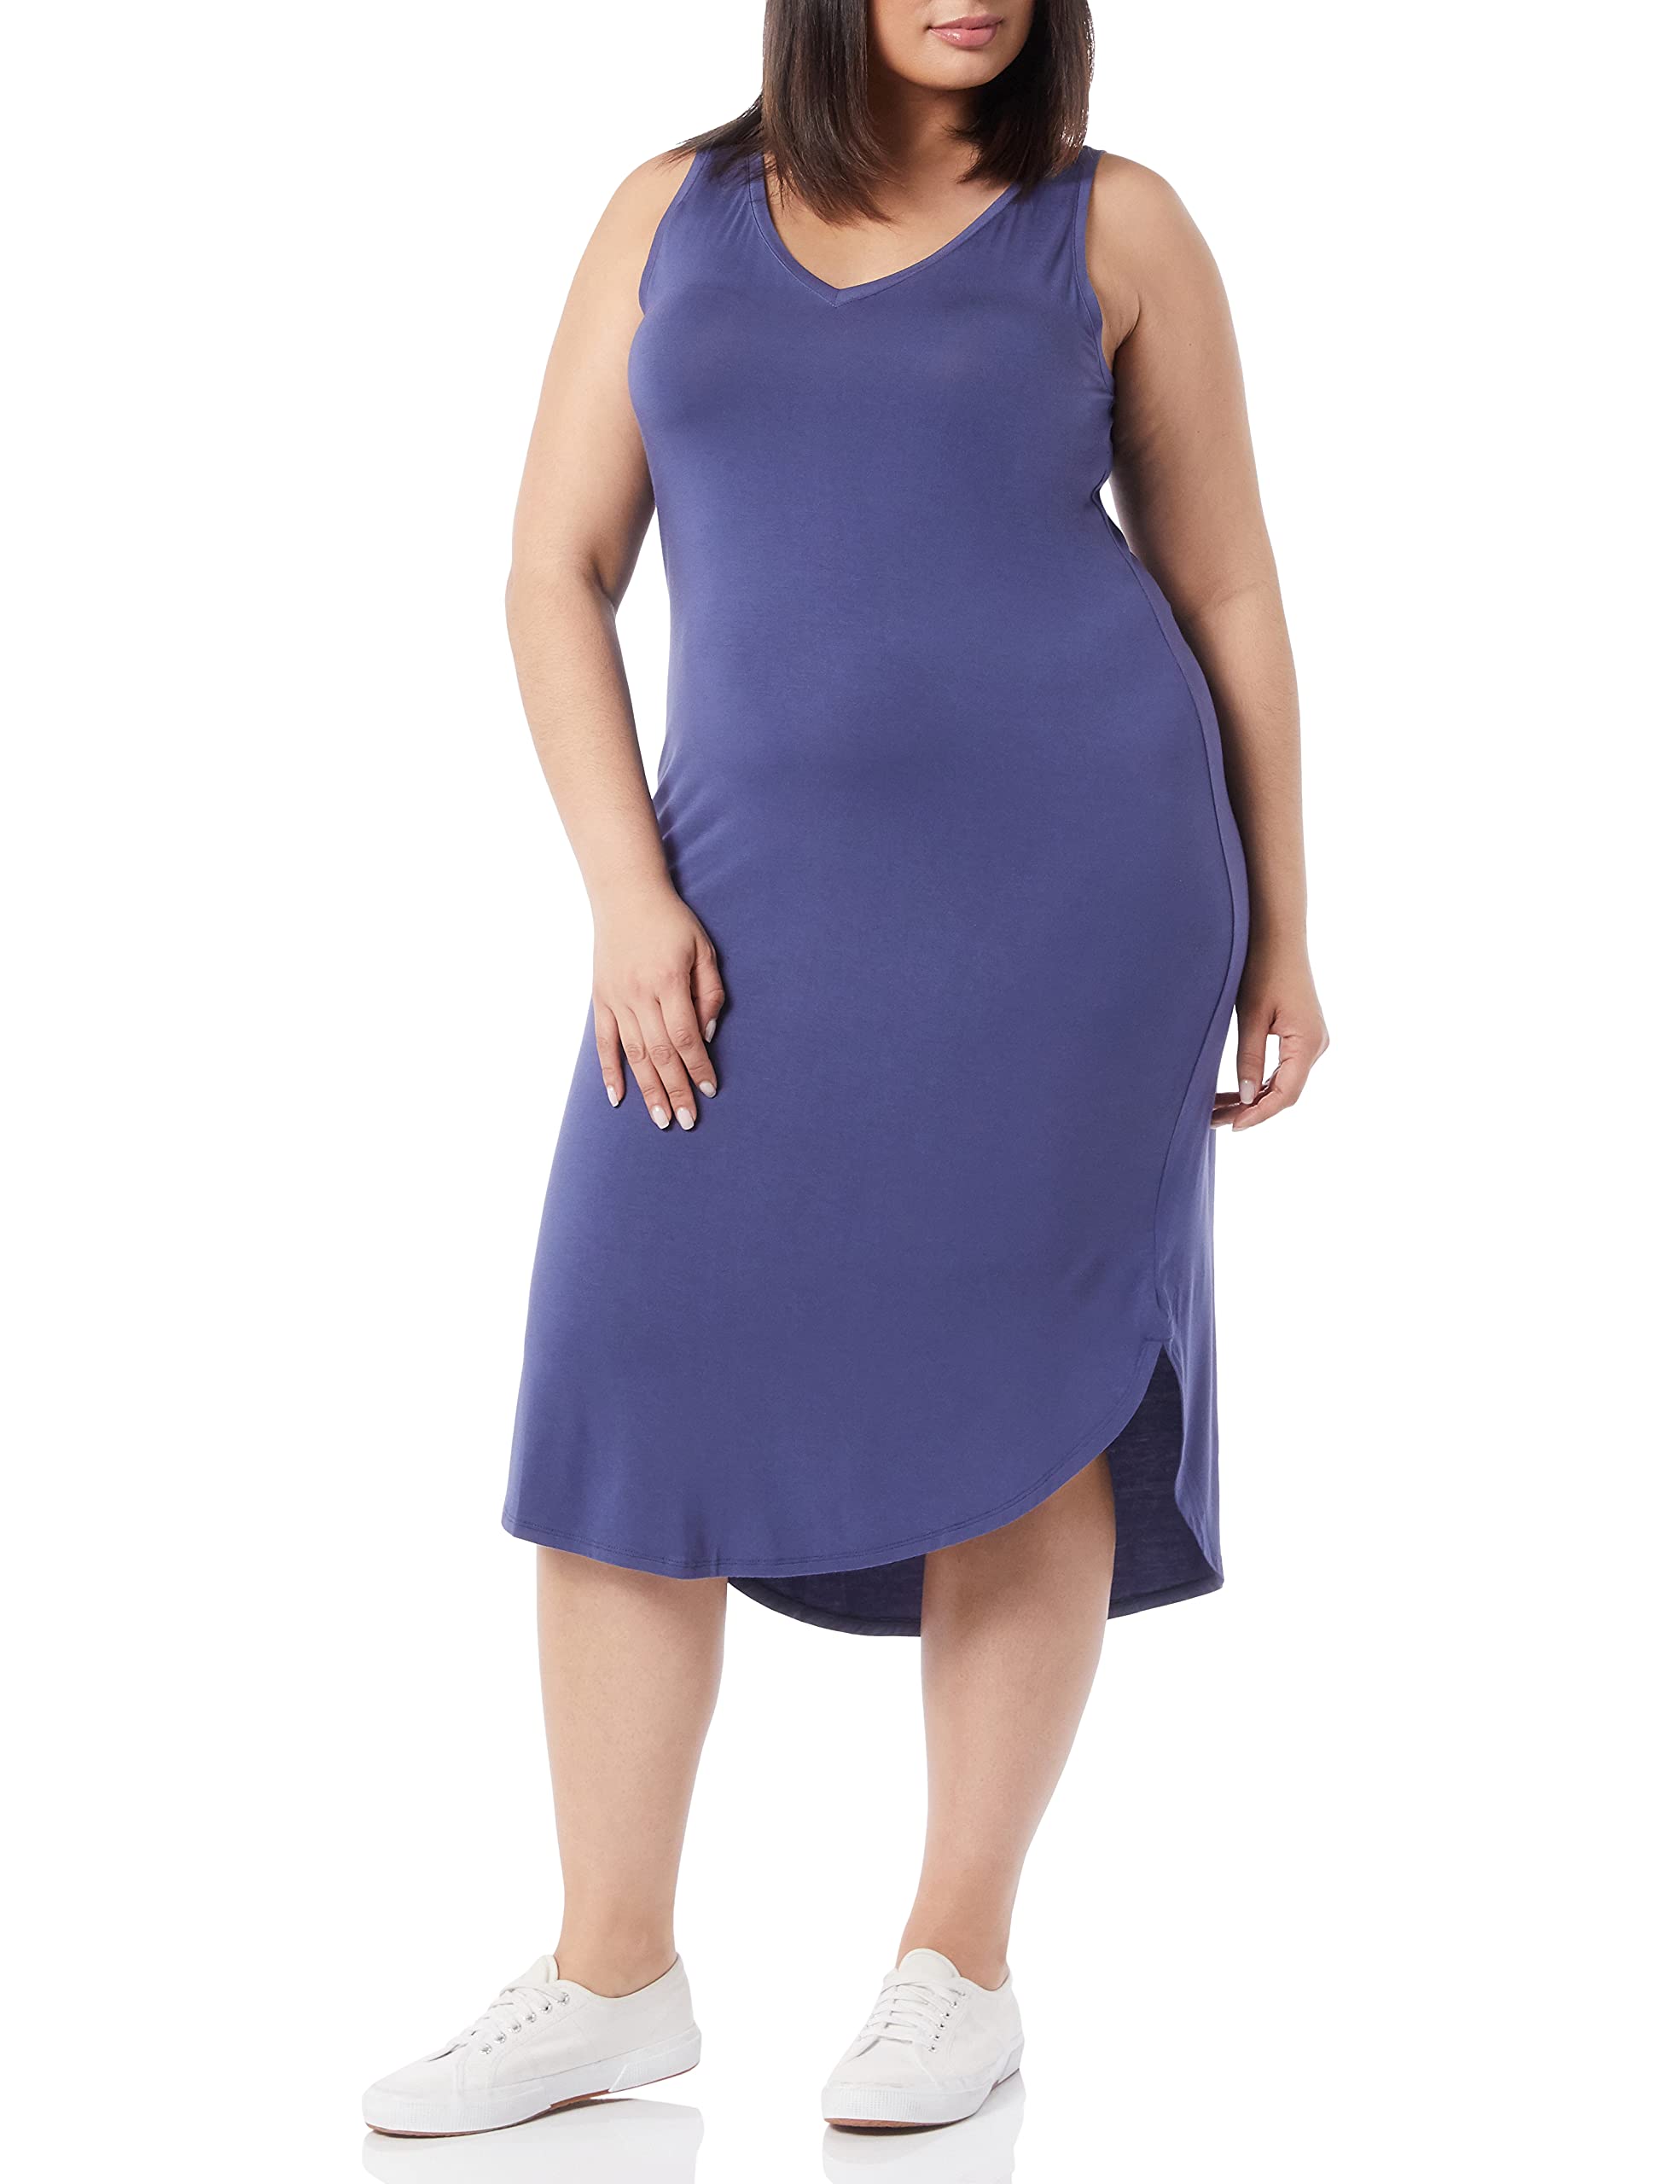 Amazon Essentials Women's Jersey Regular-Fit Sleeveless v-Neck Midi Dress (Previously Daily Ritual)